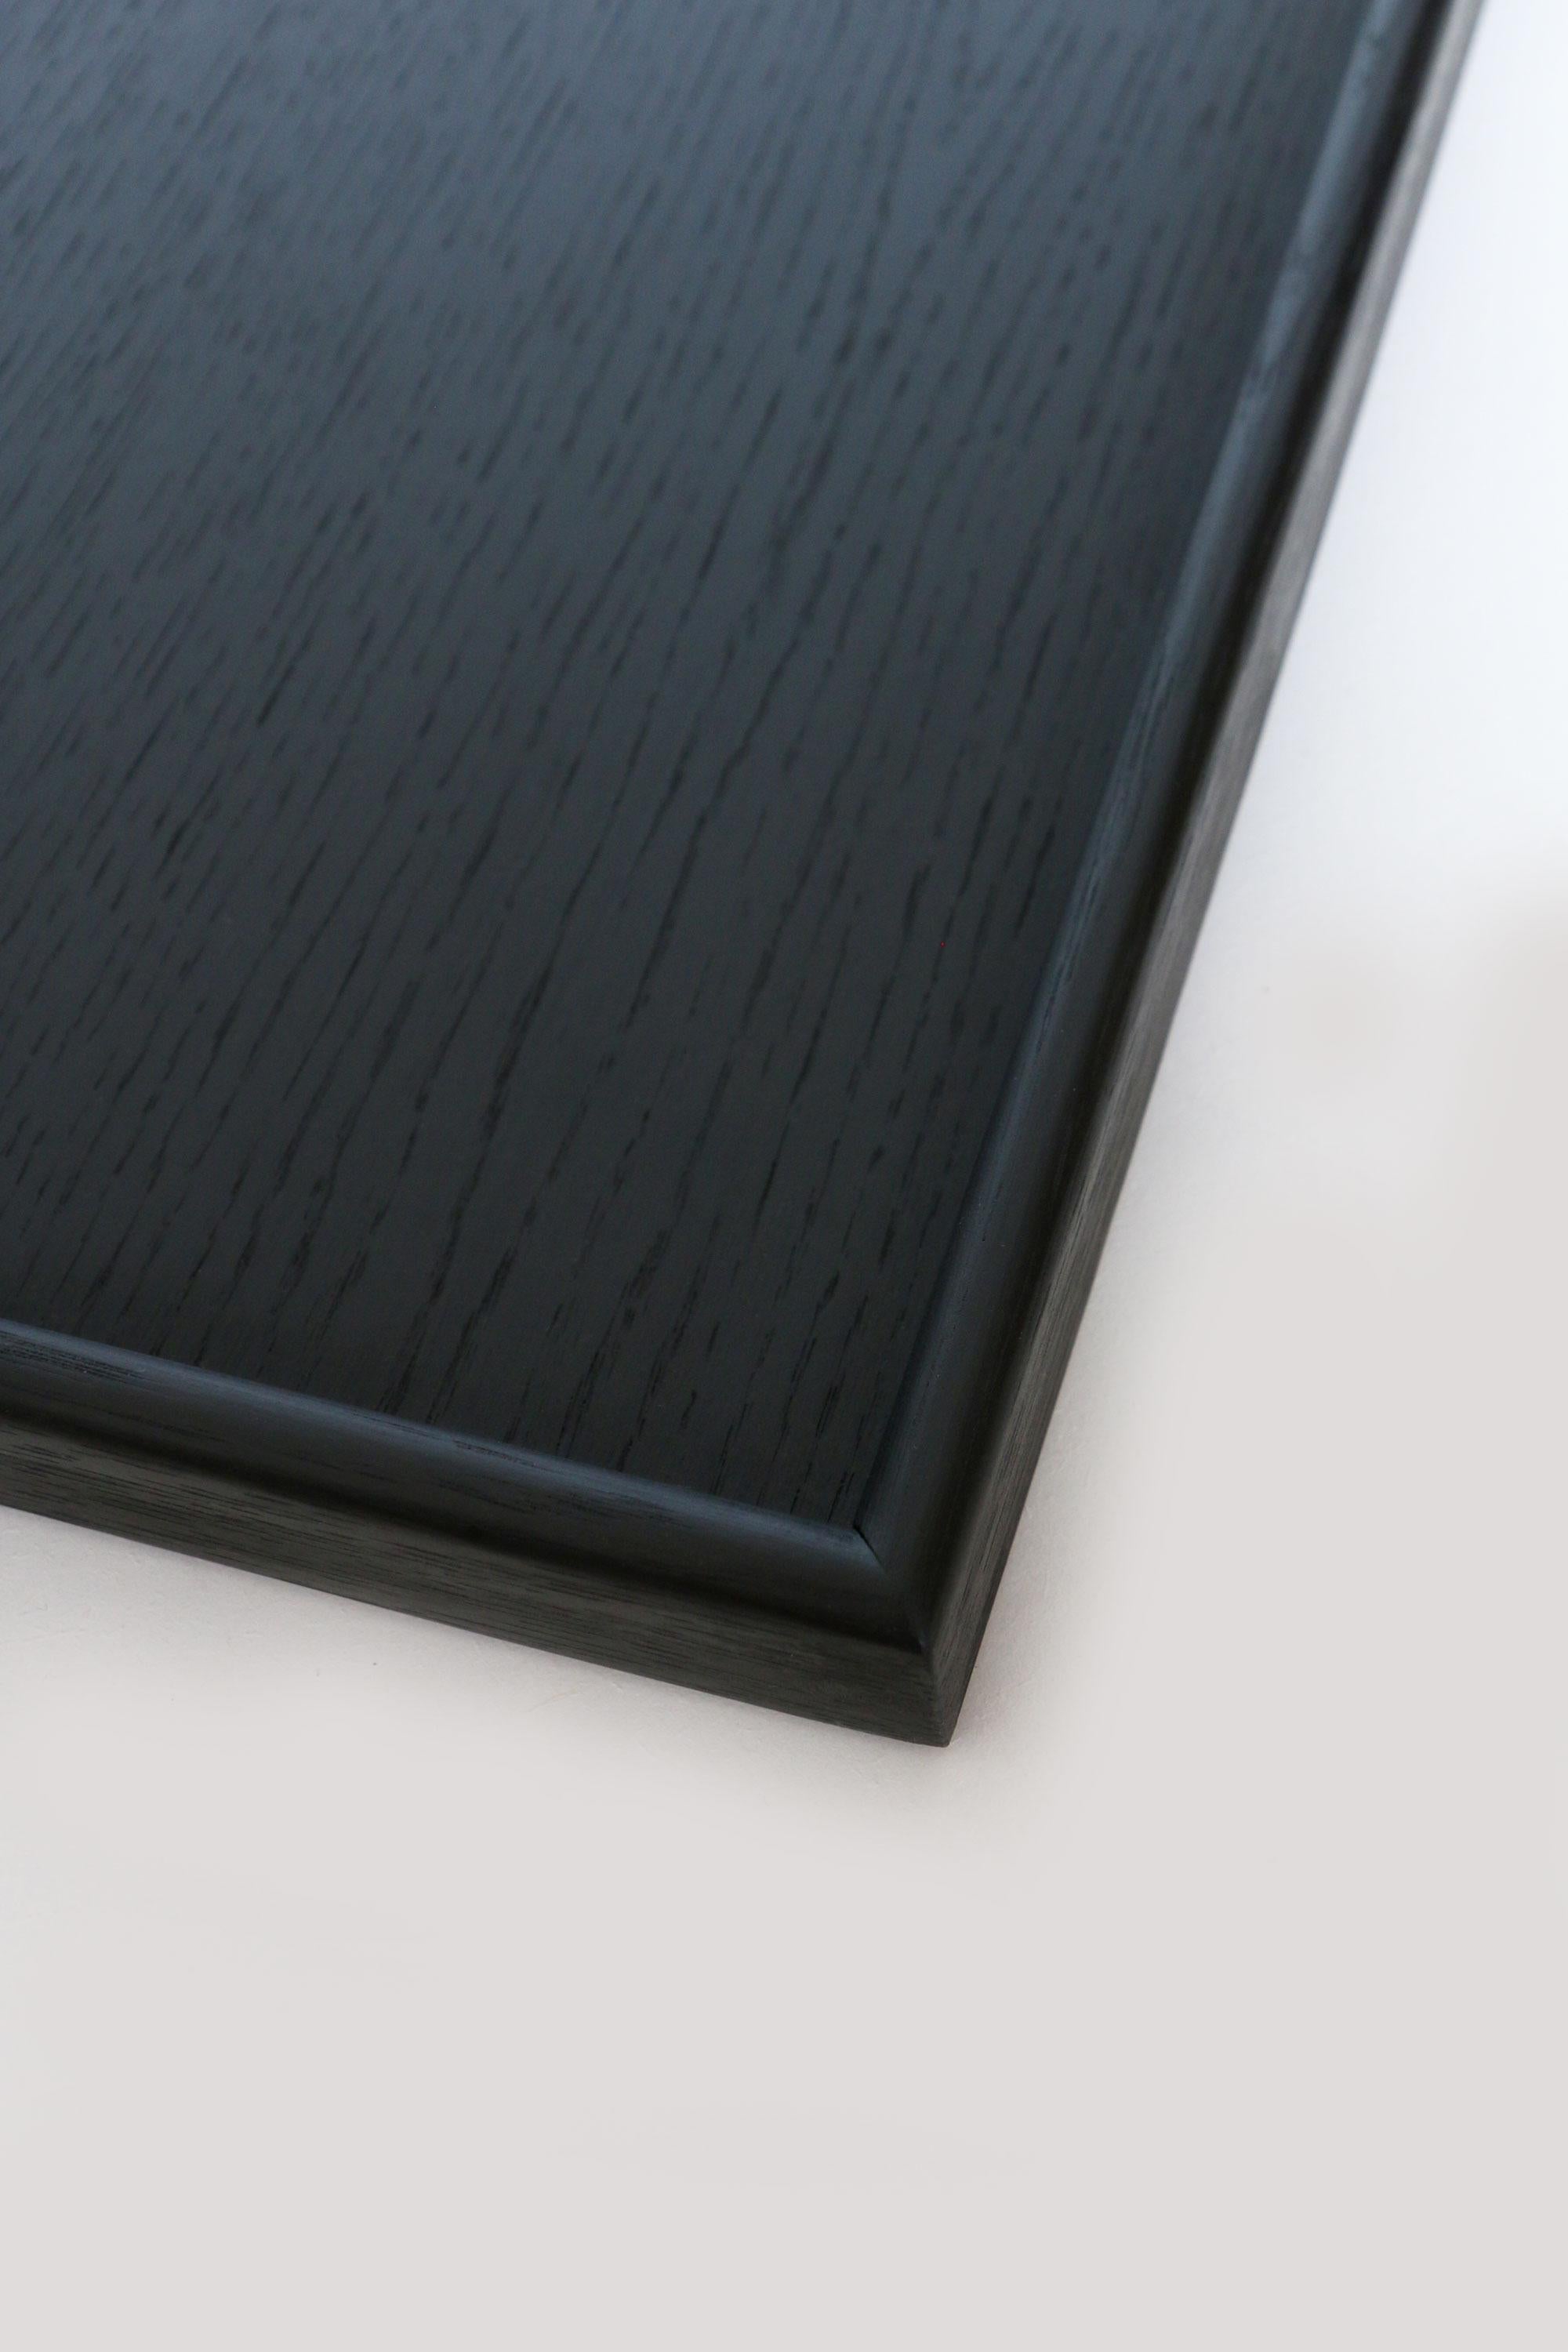 Bandeja pequeña de madera negra hecha a mano 45 x 35cm Moderno en venta